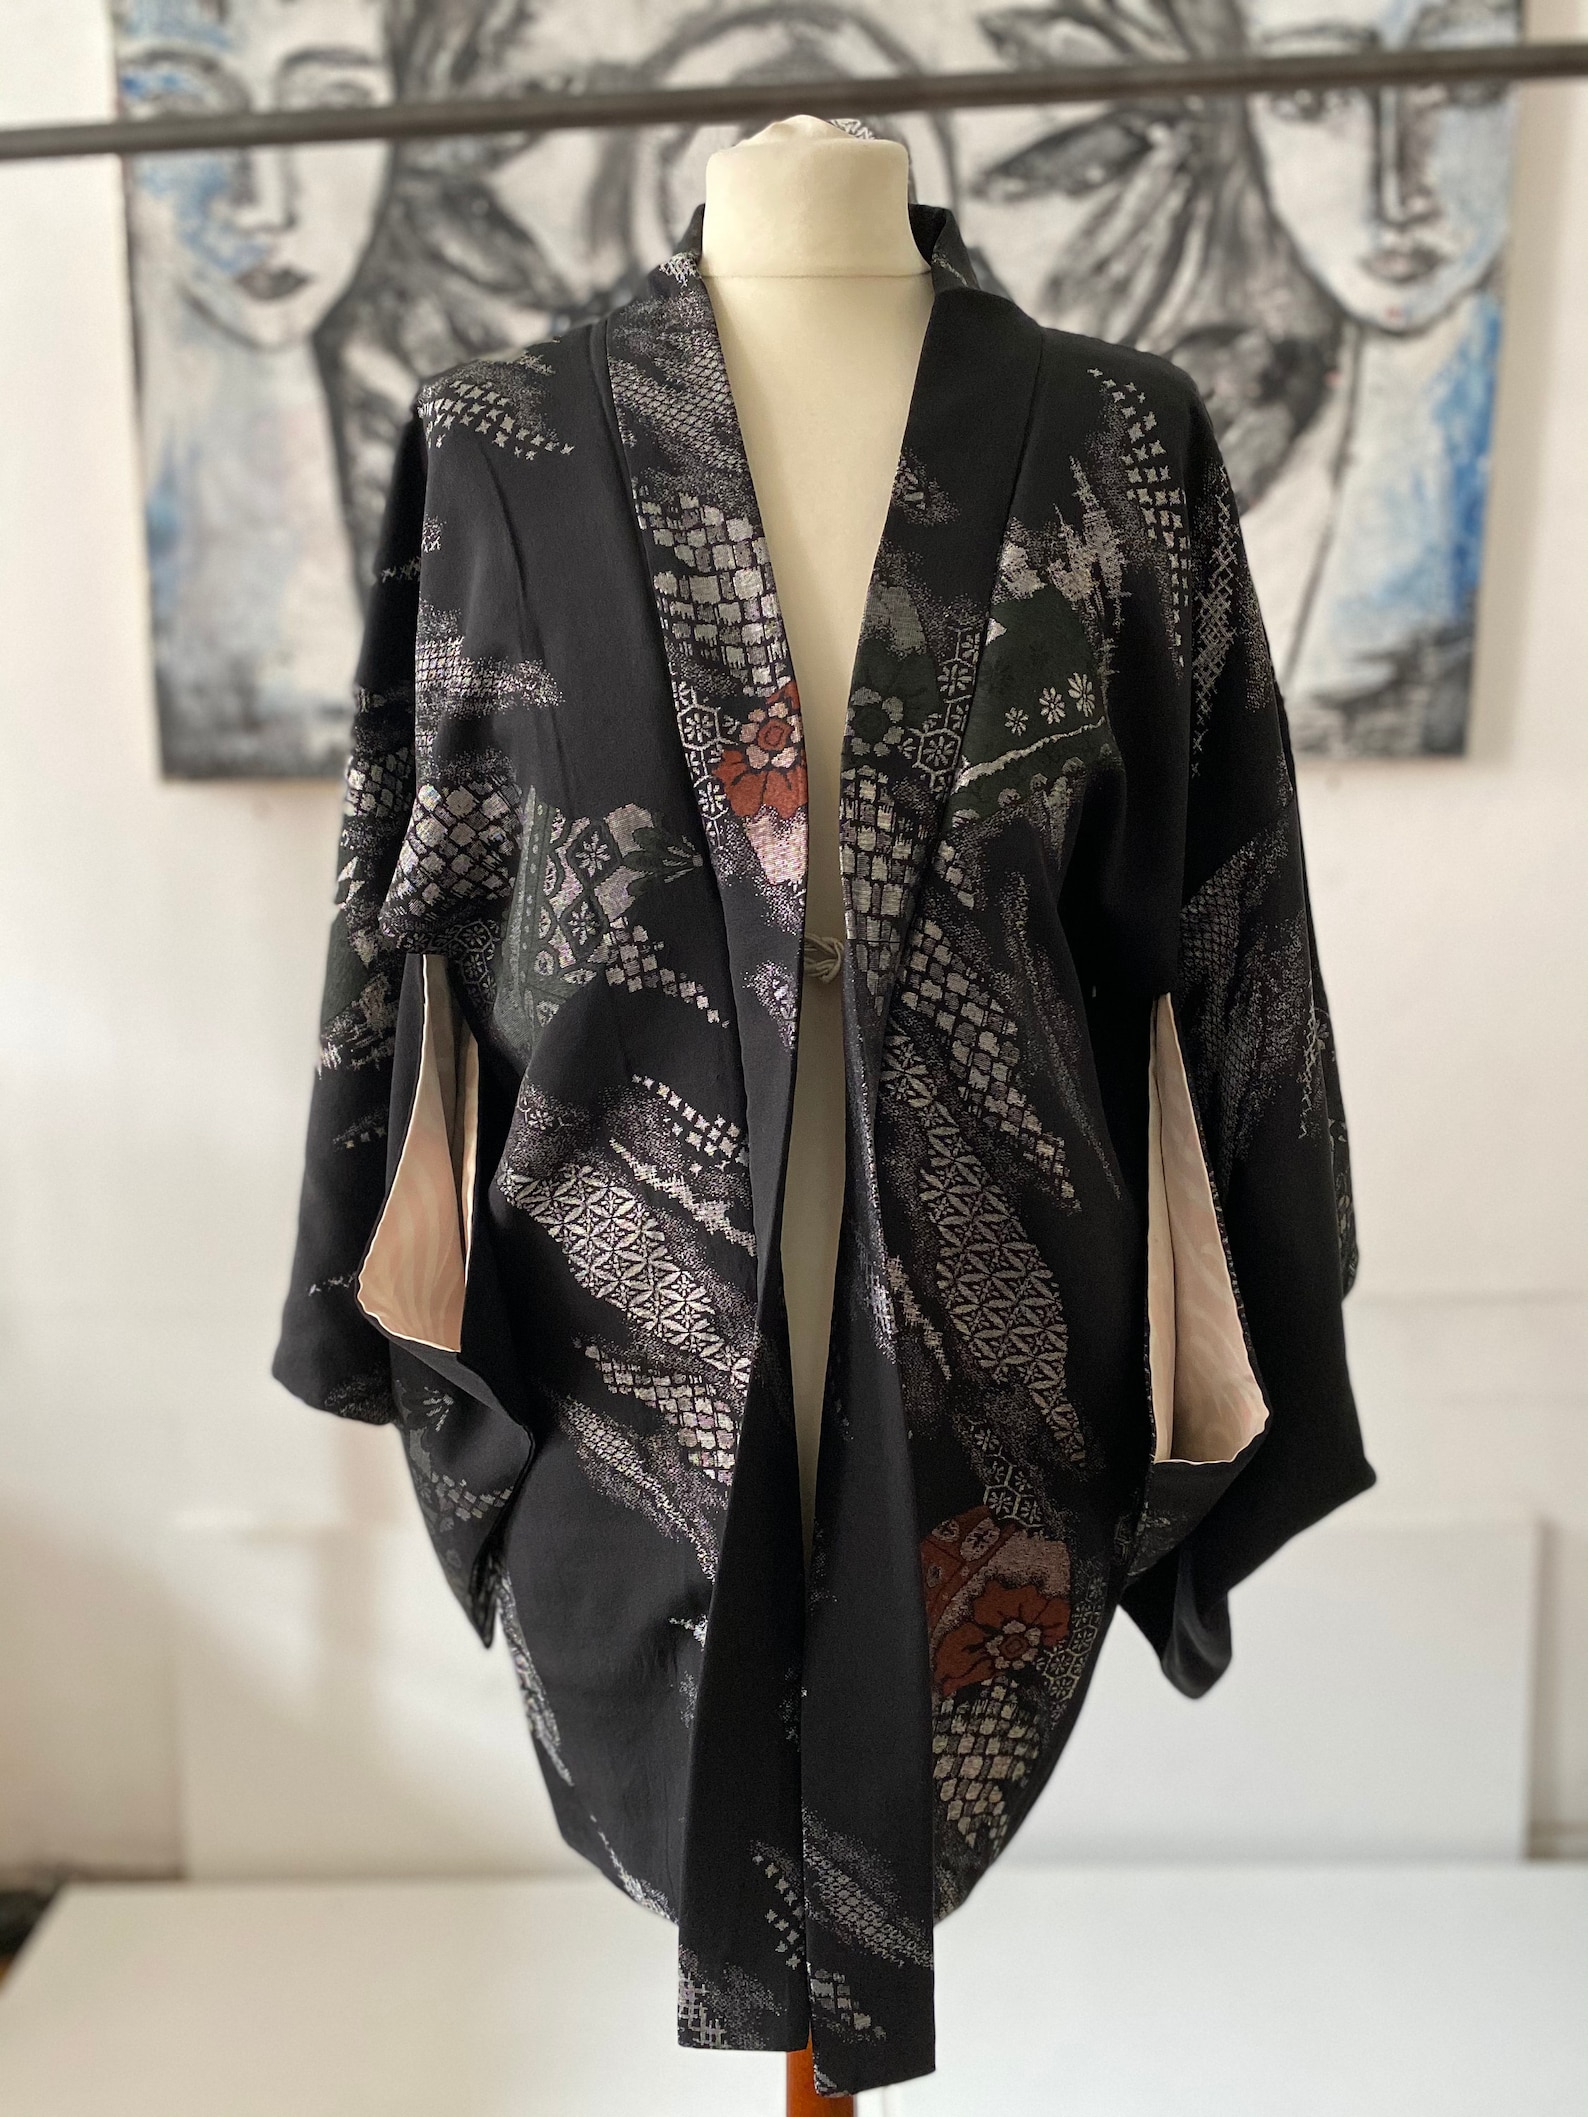 Kimono vintage Japanese silk Jacket HAORI black 漆 Urushi | Etsy